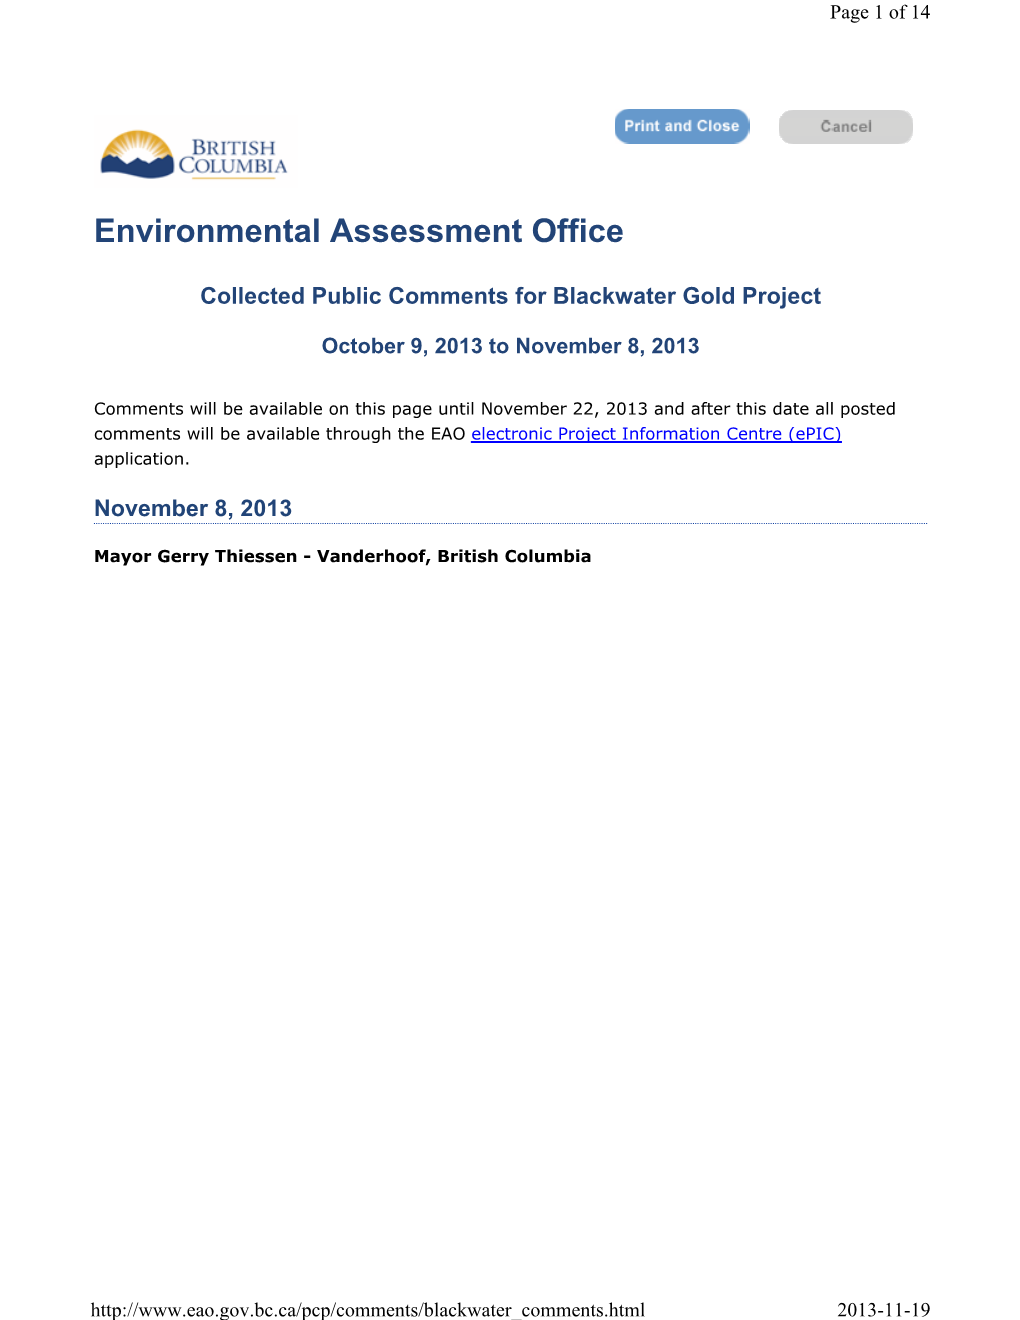 British Columbia Environmental Assessment Office, P.O